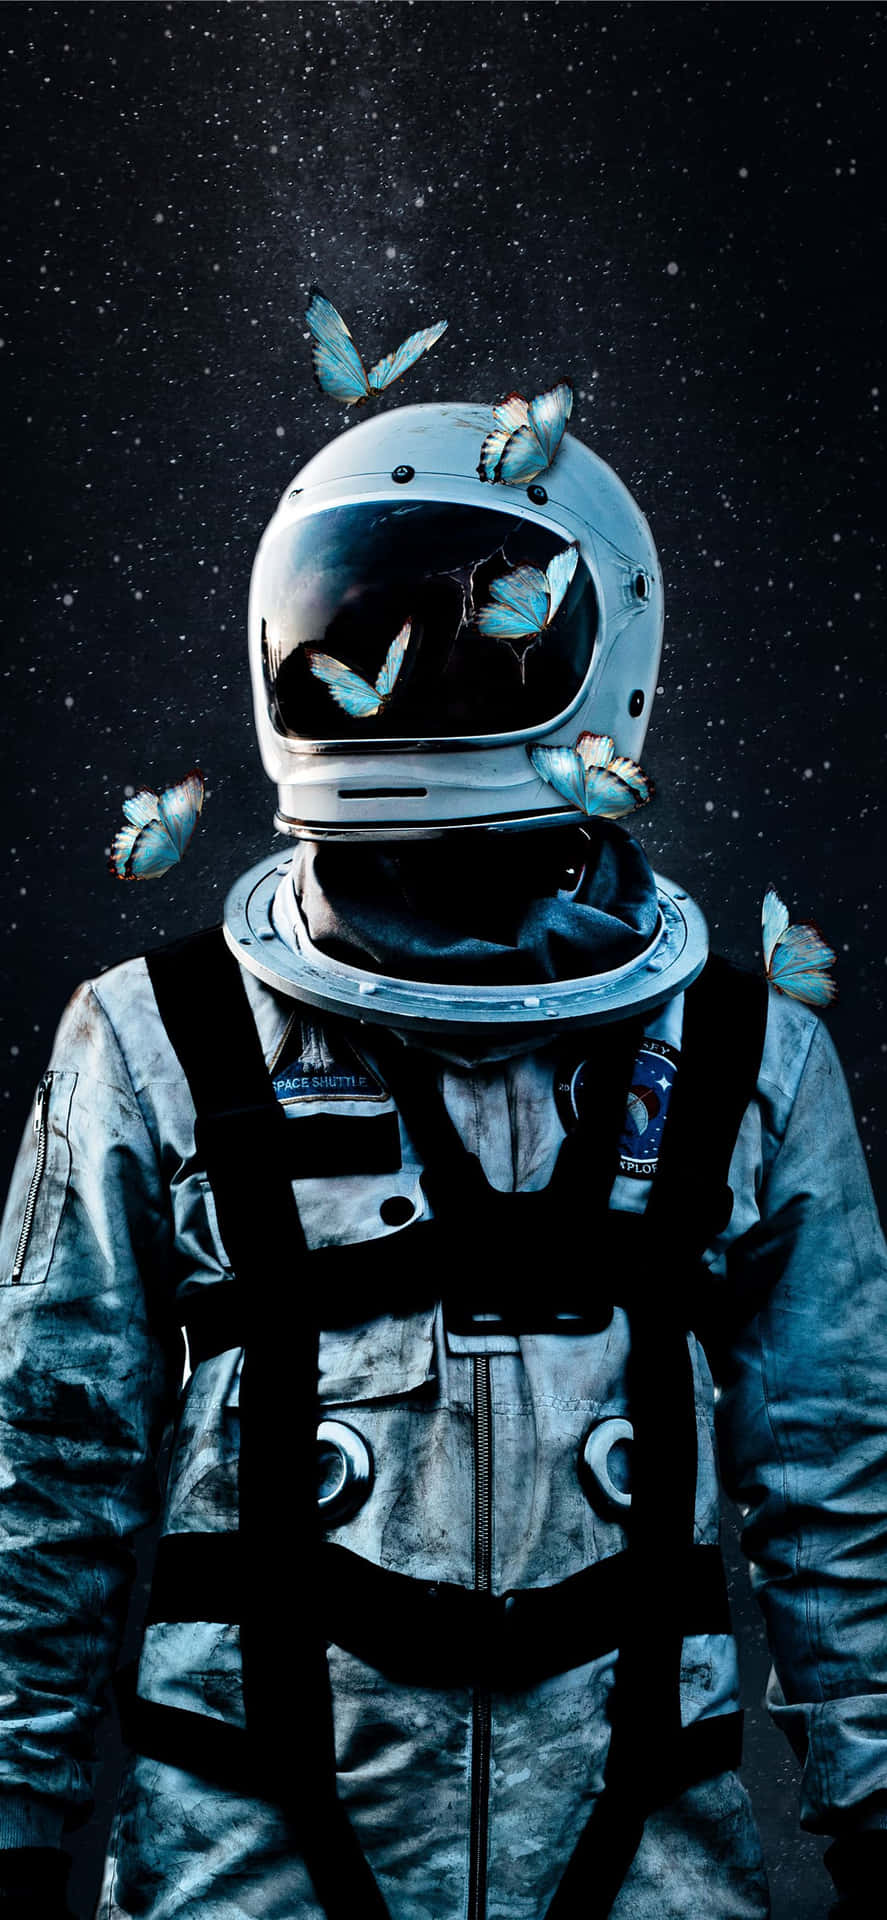 Awe-Inspiring Astronaut Exploring New Worlds Wallpaper